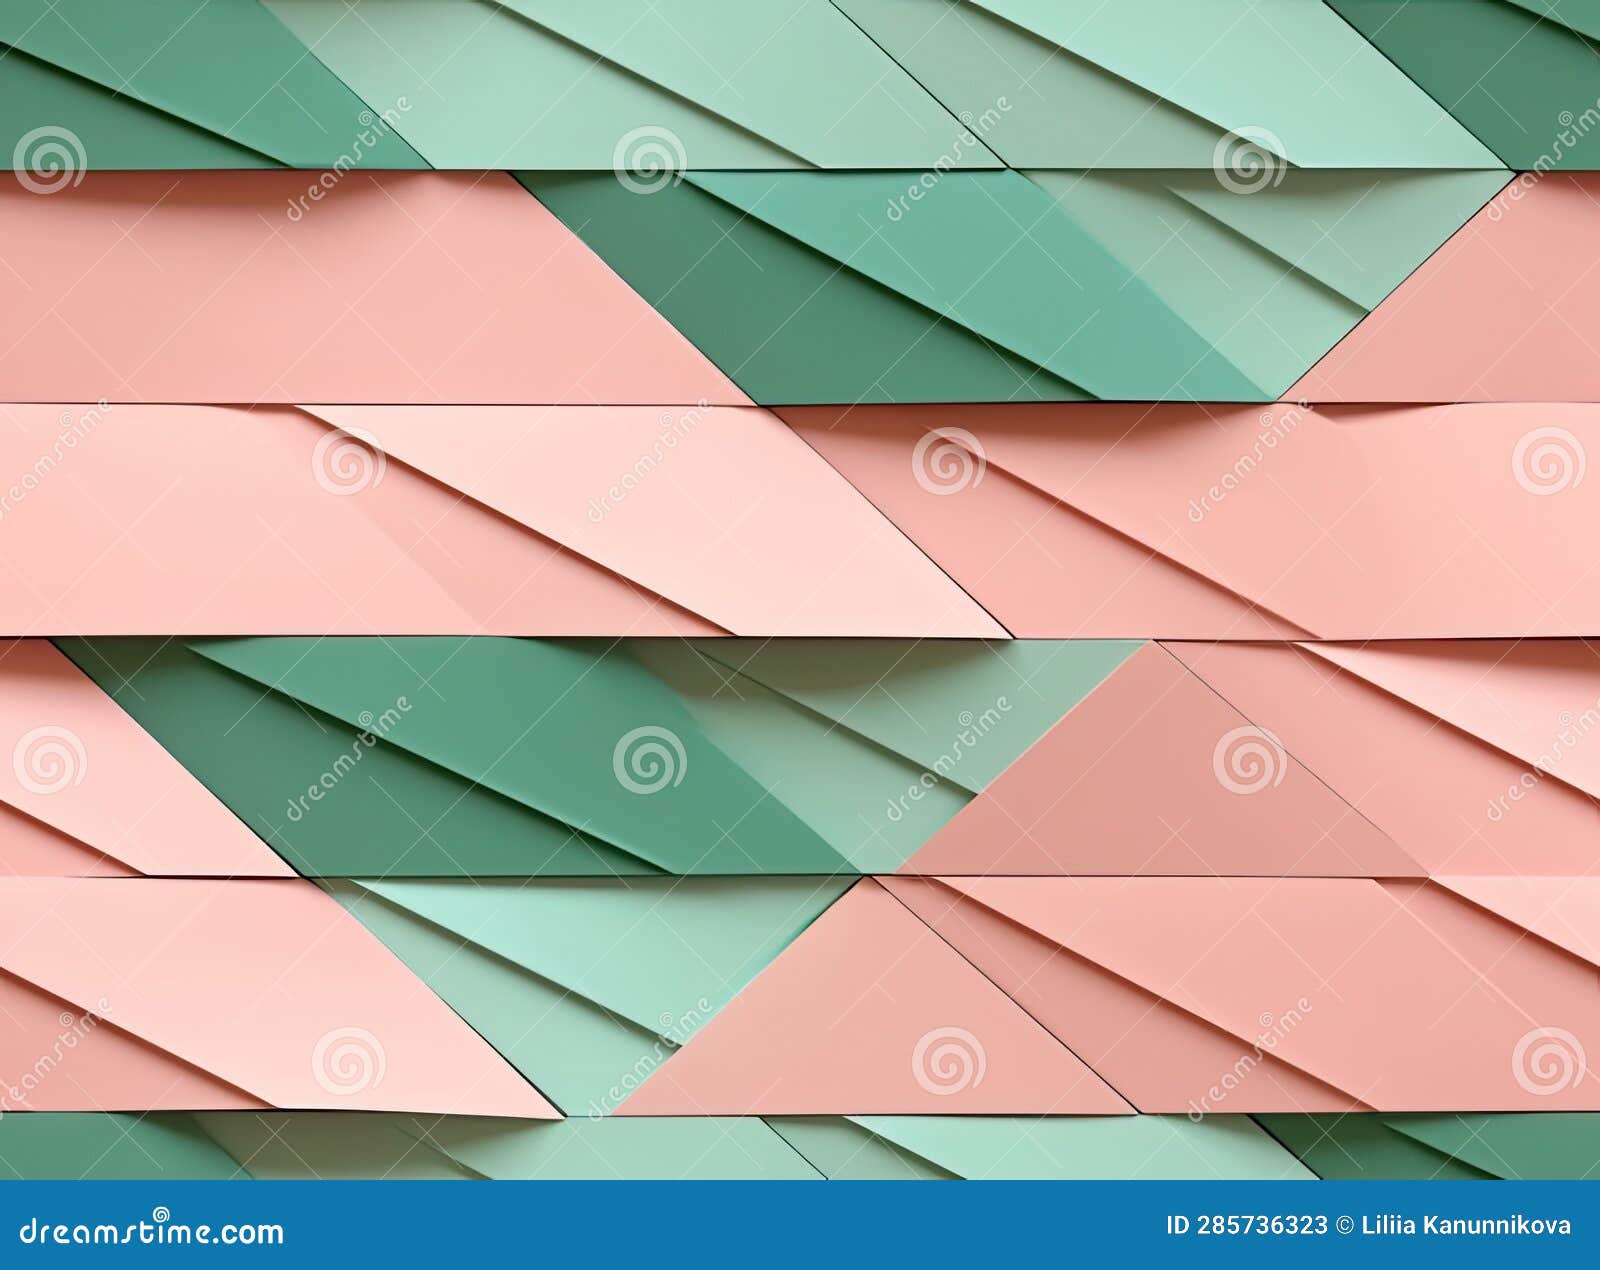 https://thumbs.dreamstime.com/z/paper-pastel-overlap-pink-green-color-background-presentation-template-creative-trendy-design-banner-natural-colors-285736323.jpg